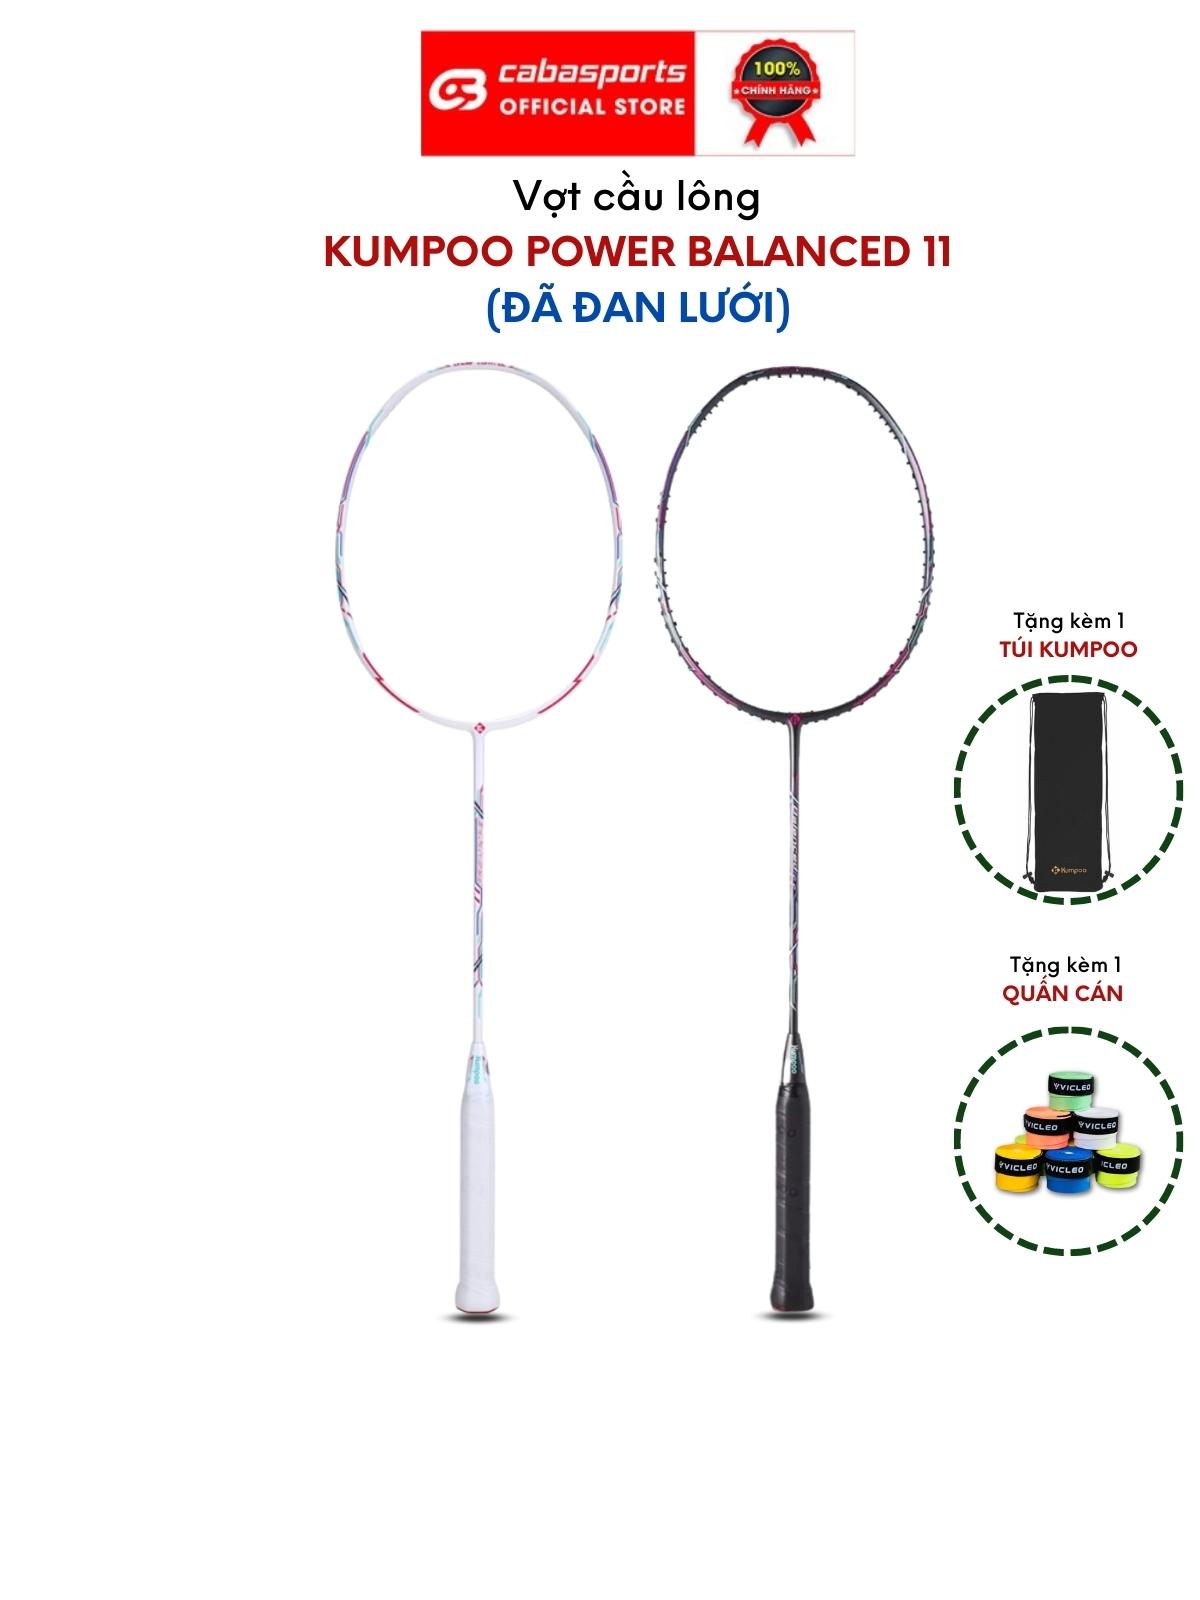 vợt cầu lông kumpoo power balanced 11